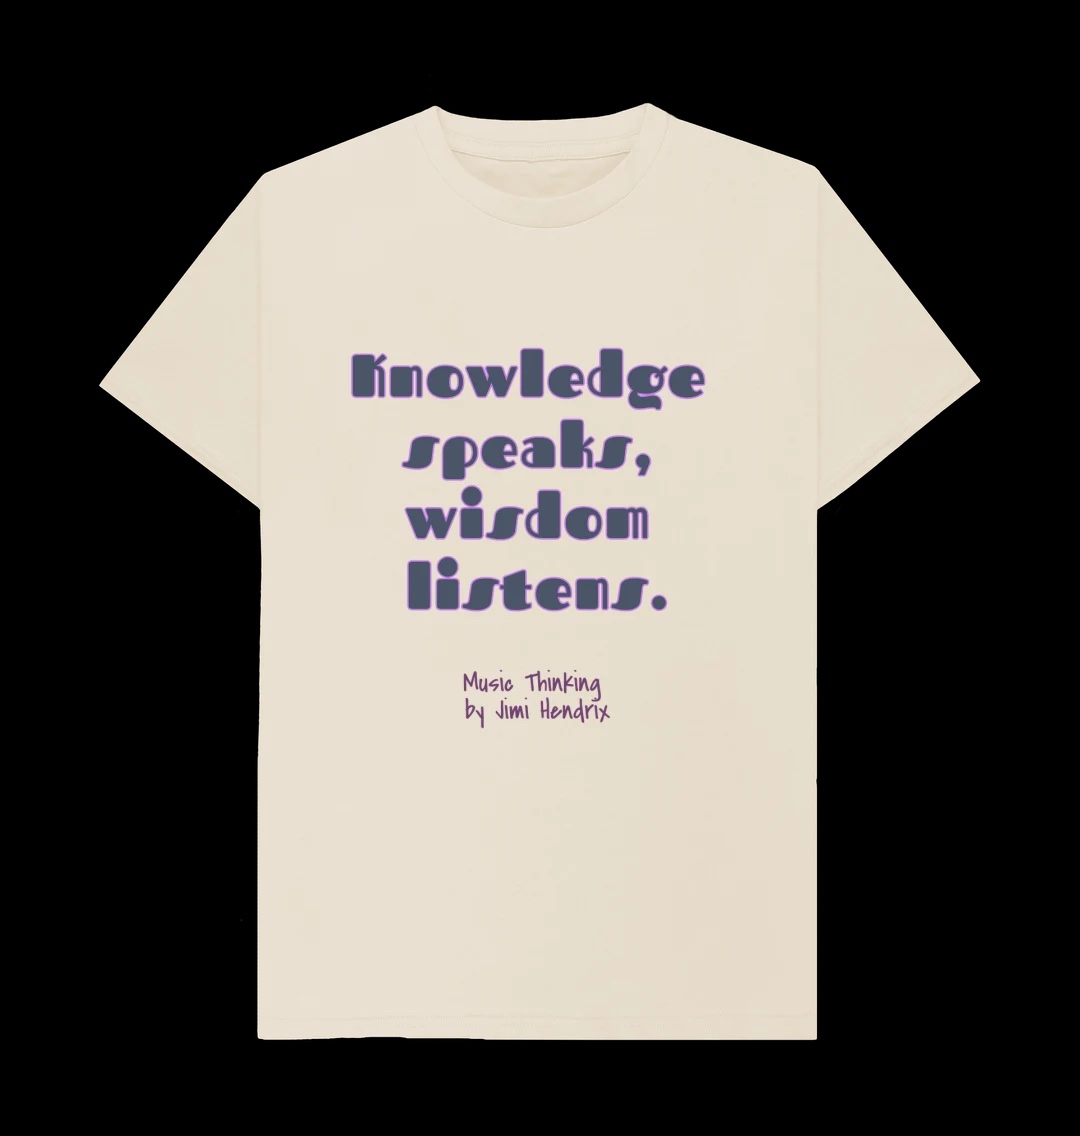 Knowledge speaks, wisdom listens. Jimi Hendrix